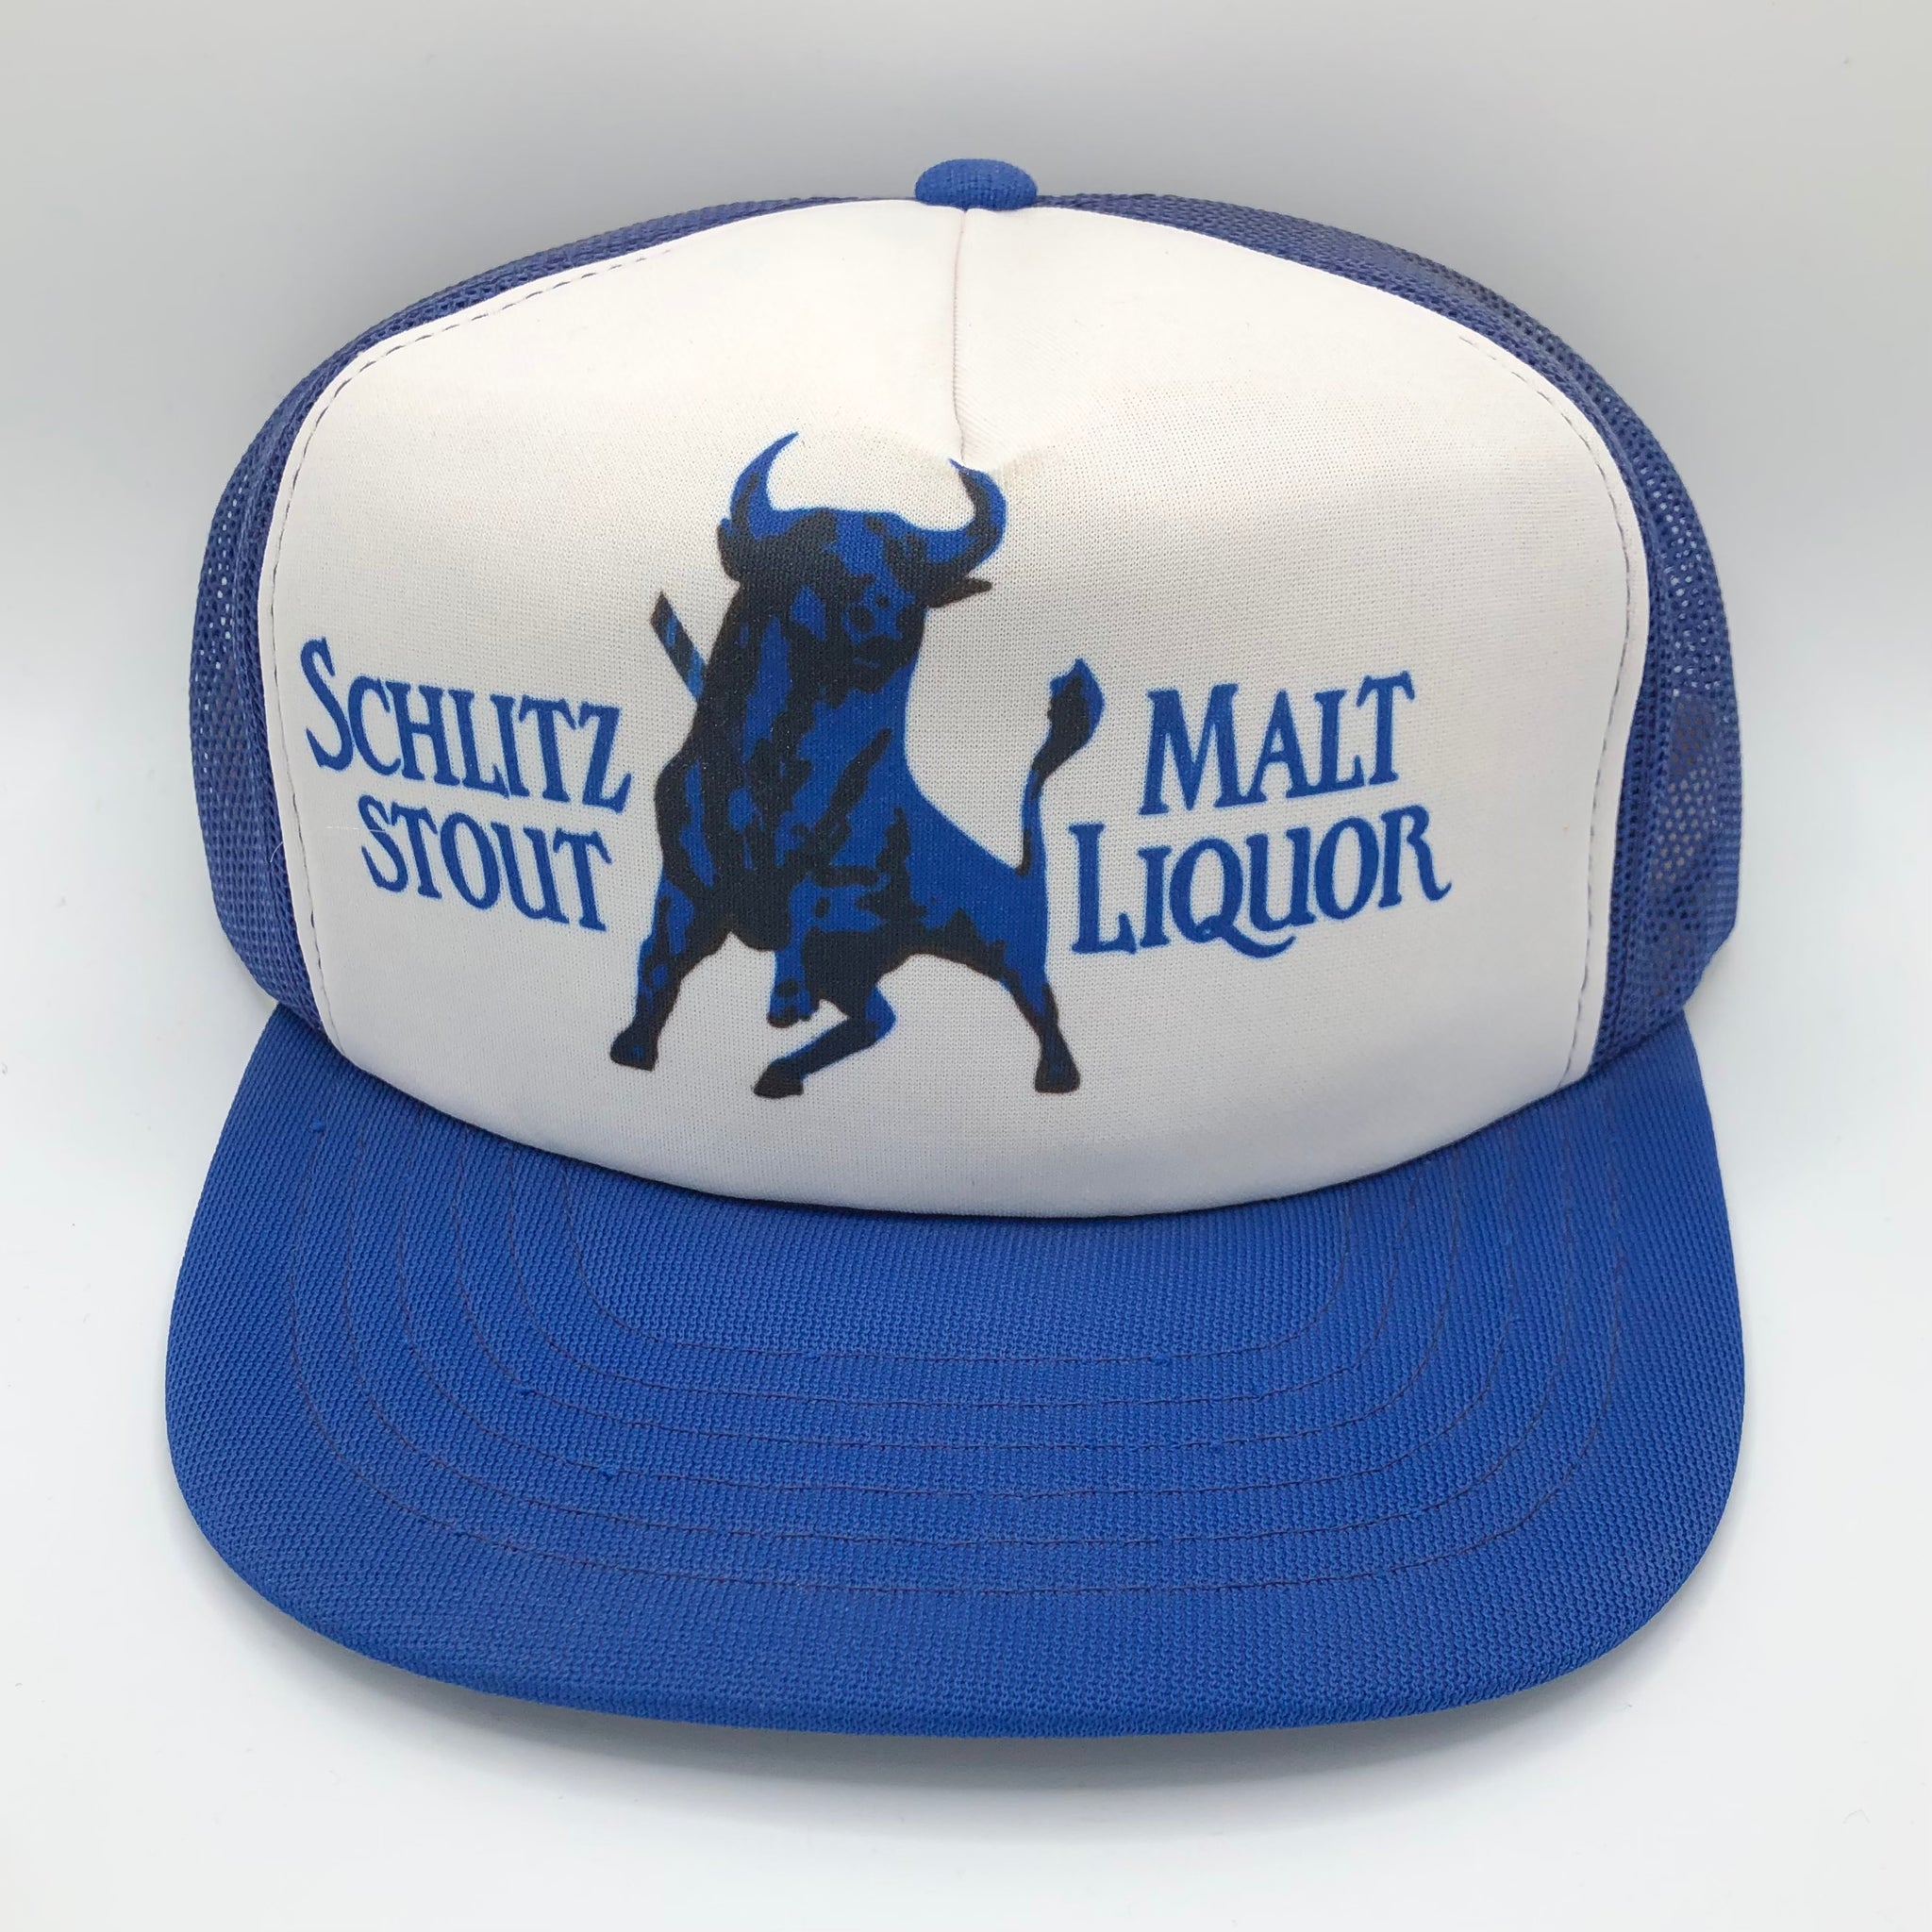 Vintage Schlitz Malt Liquor Trucker Hat